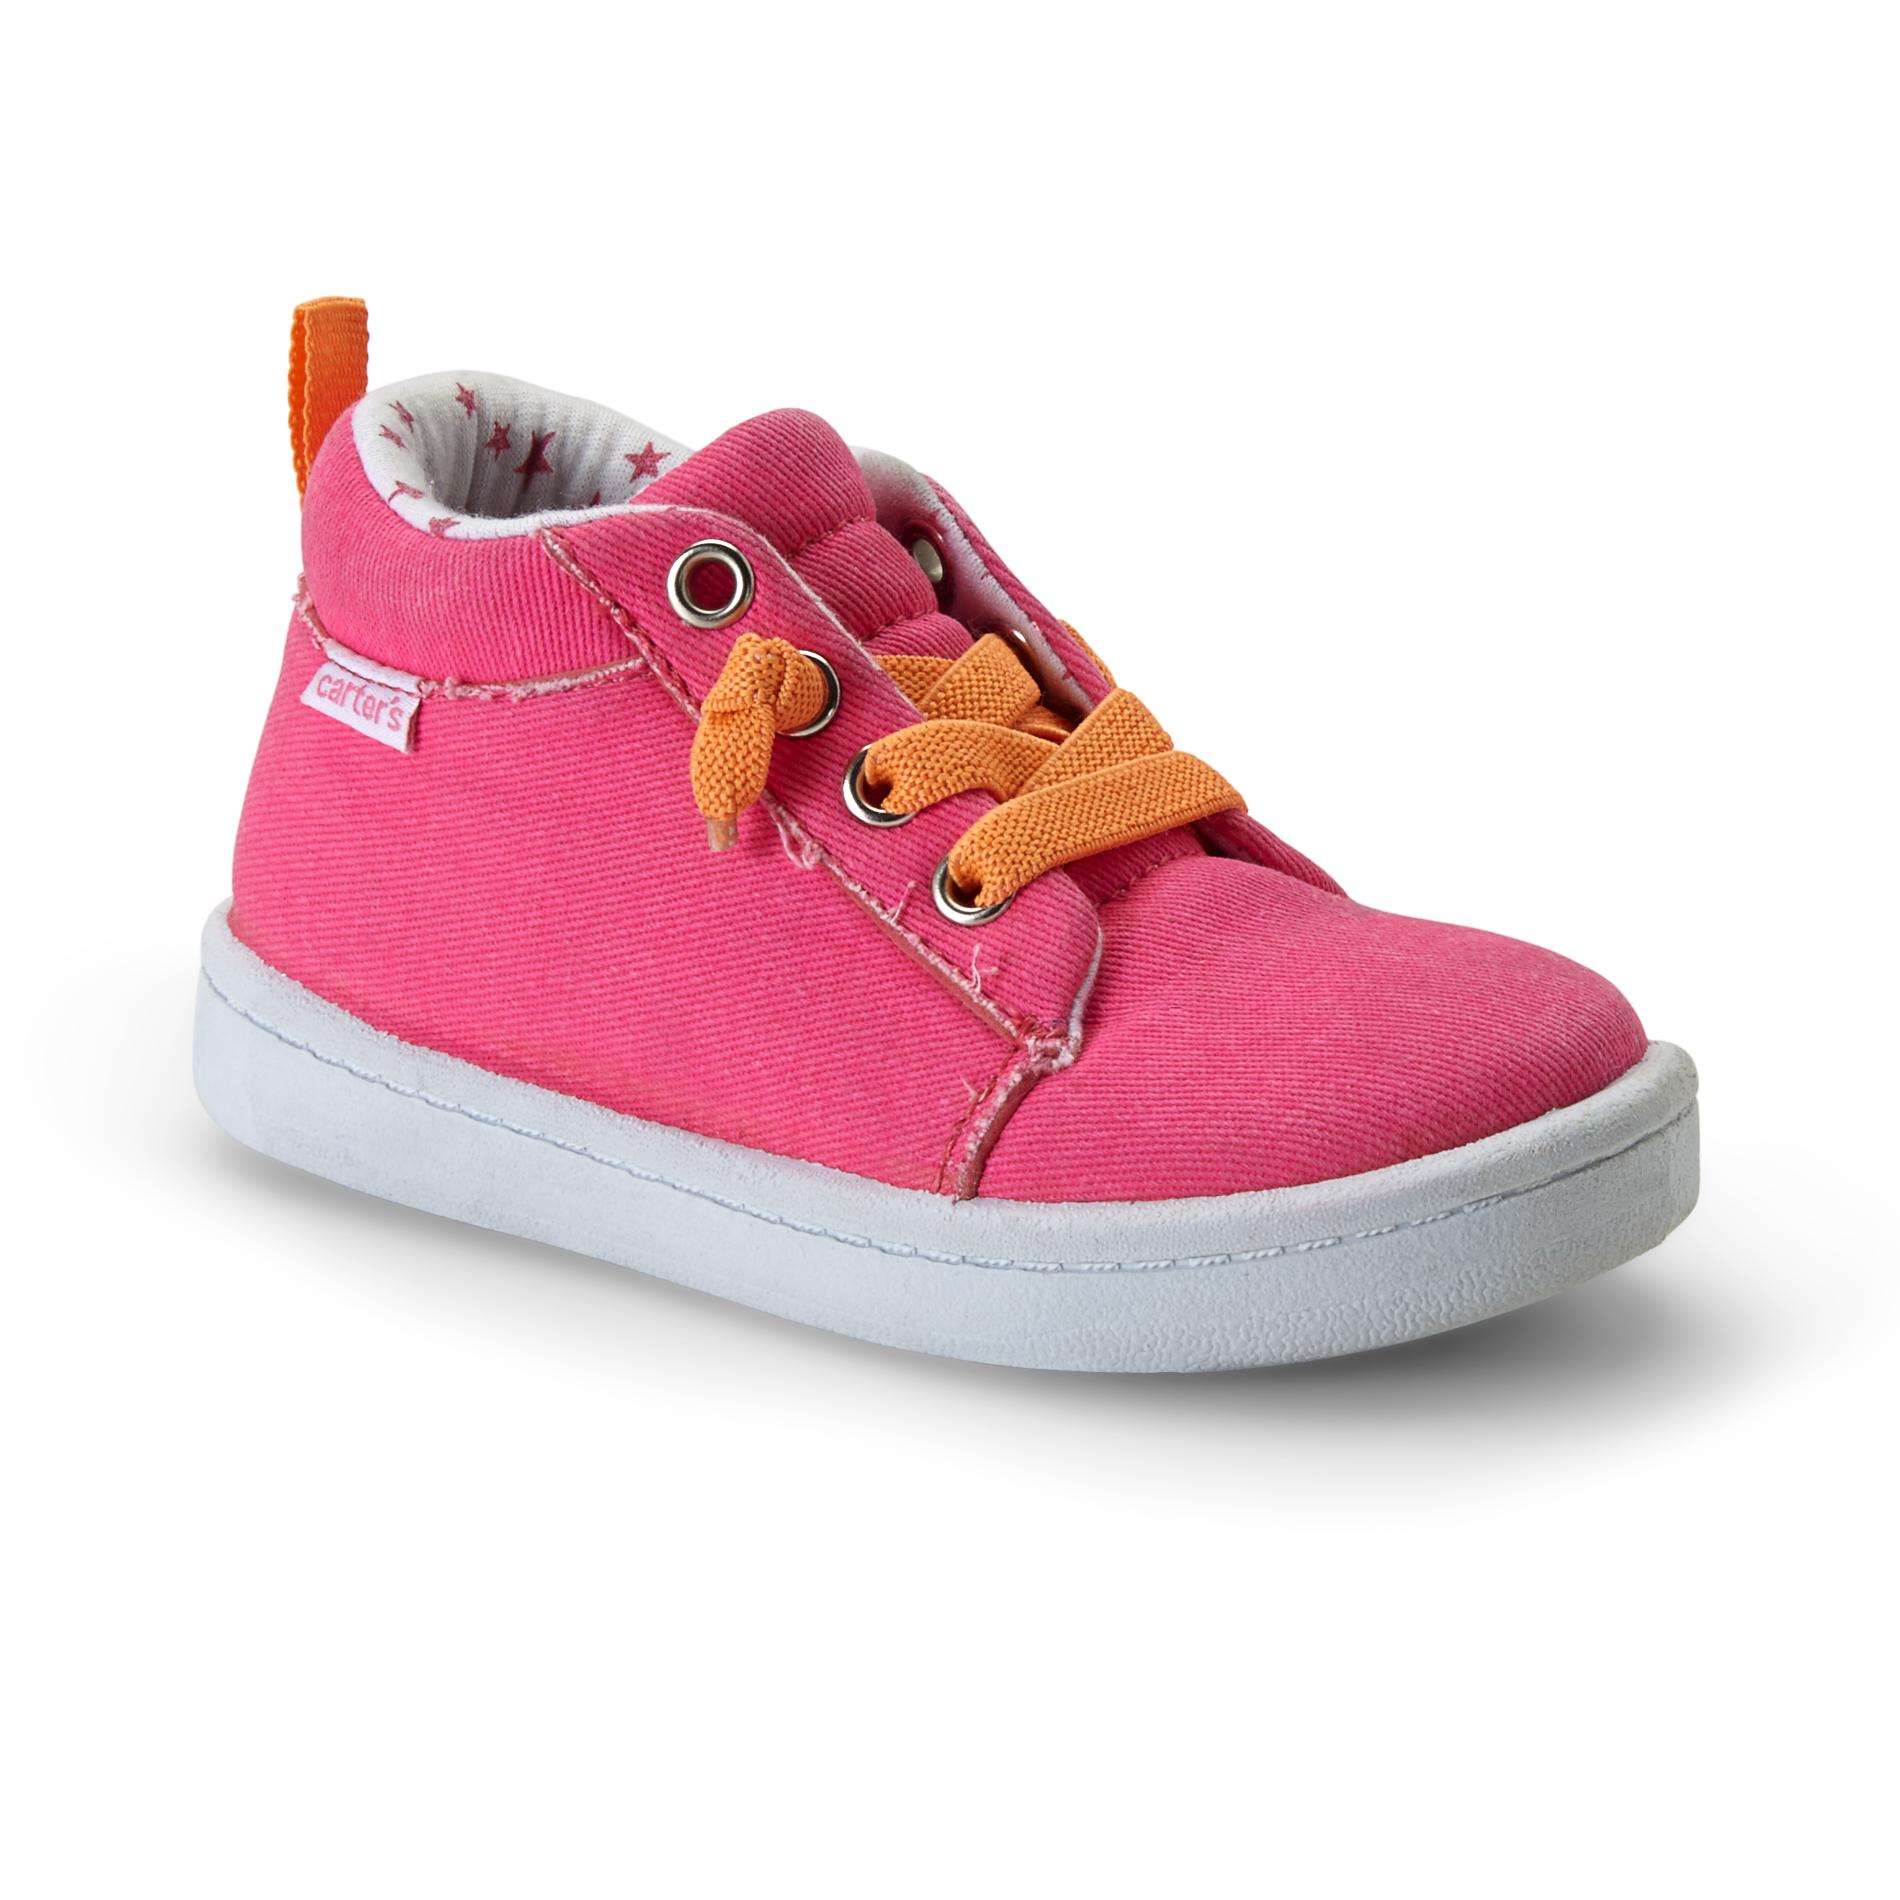 Carter's Toddler Girl's Aken Neon Pink High-Top Sneaker